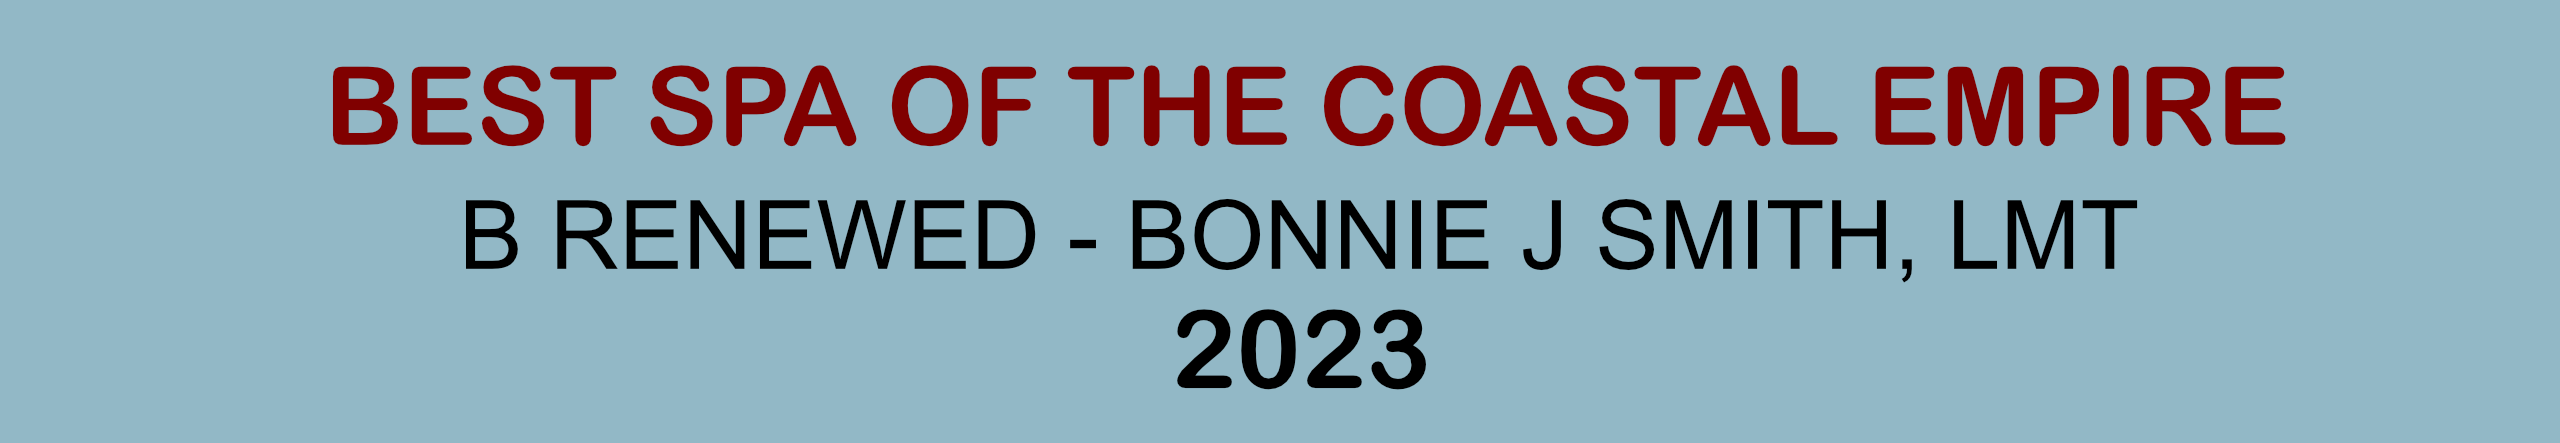 B Renewed by Bonnie J Smith, LMT Best Spa Coastal Empire 2023